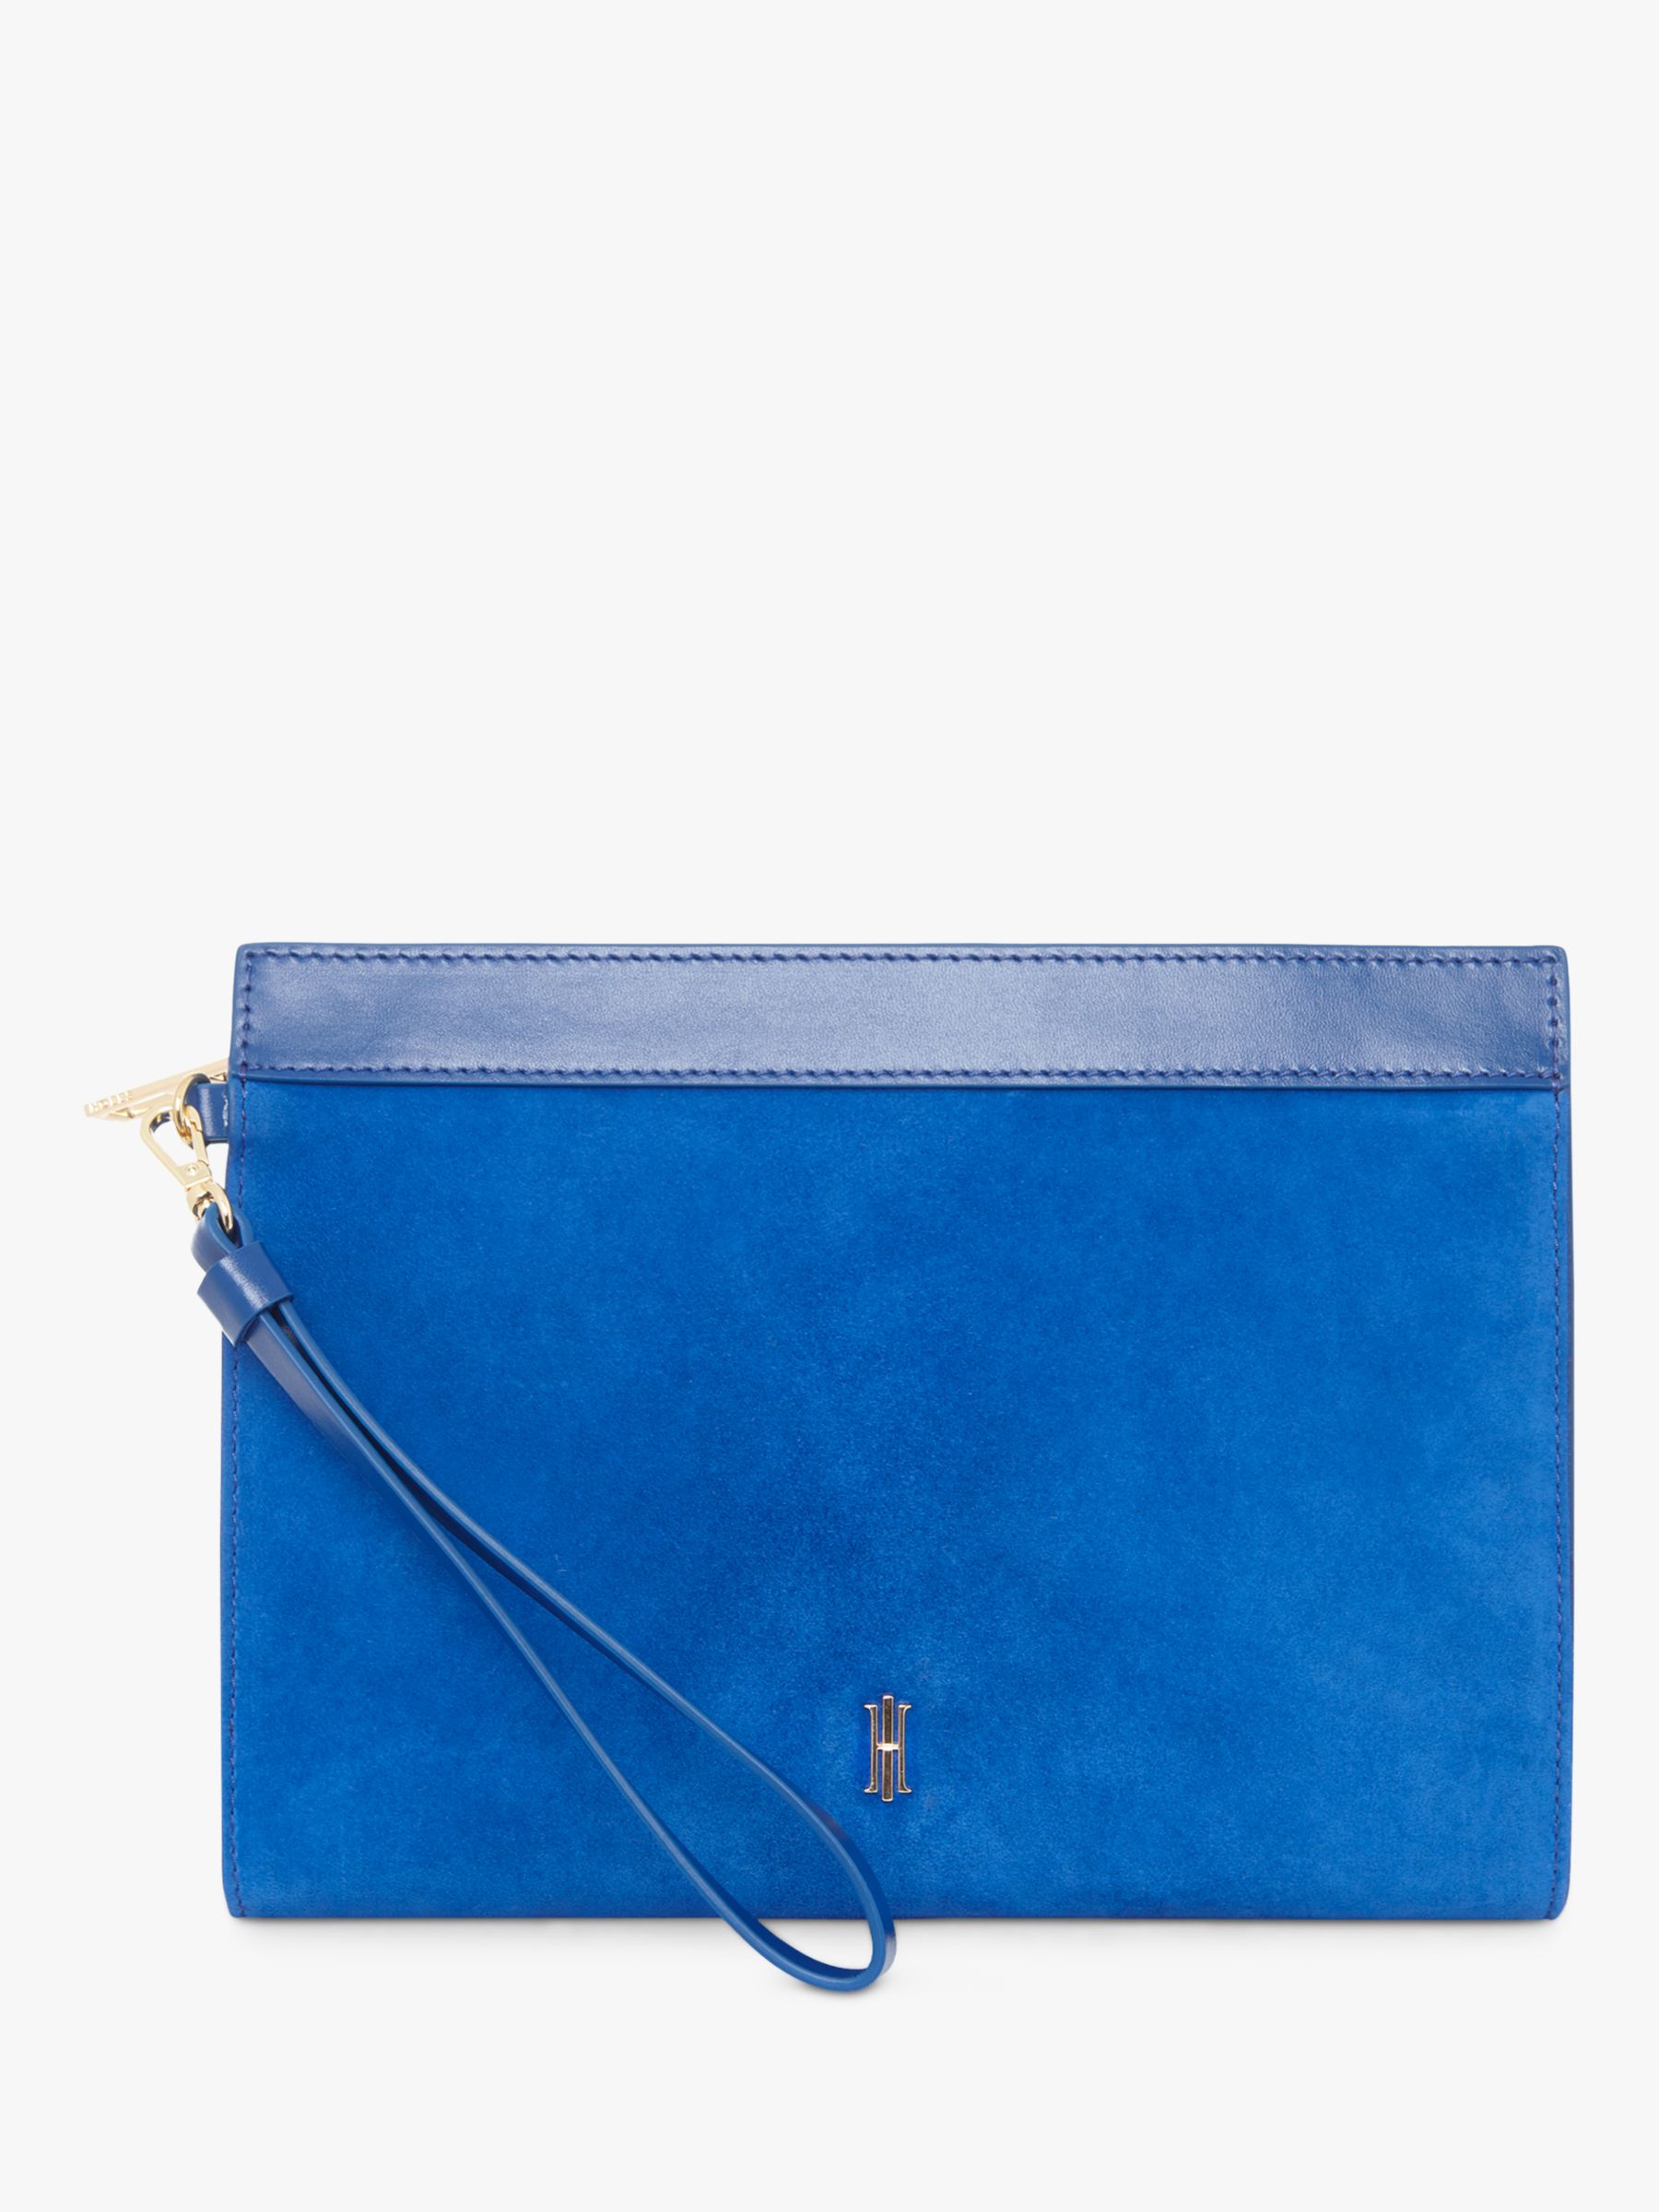 Hobbs Catherine Suede Wrislet Clutch Bag, Lapis Blue, One Size